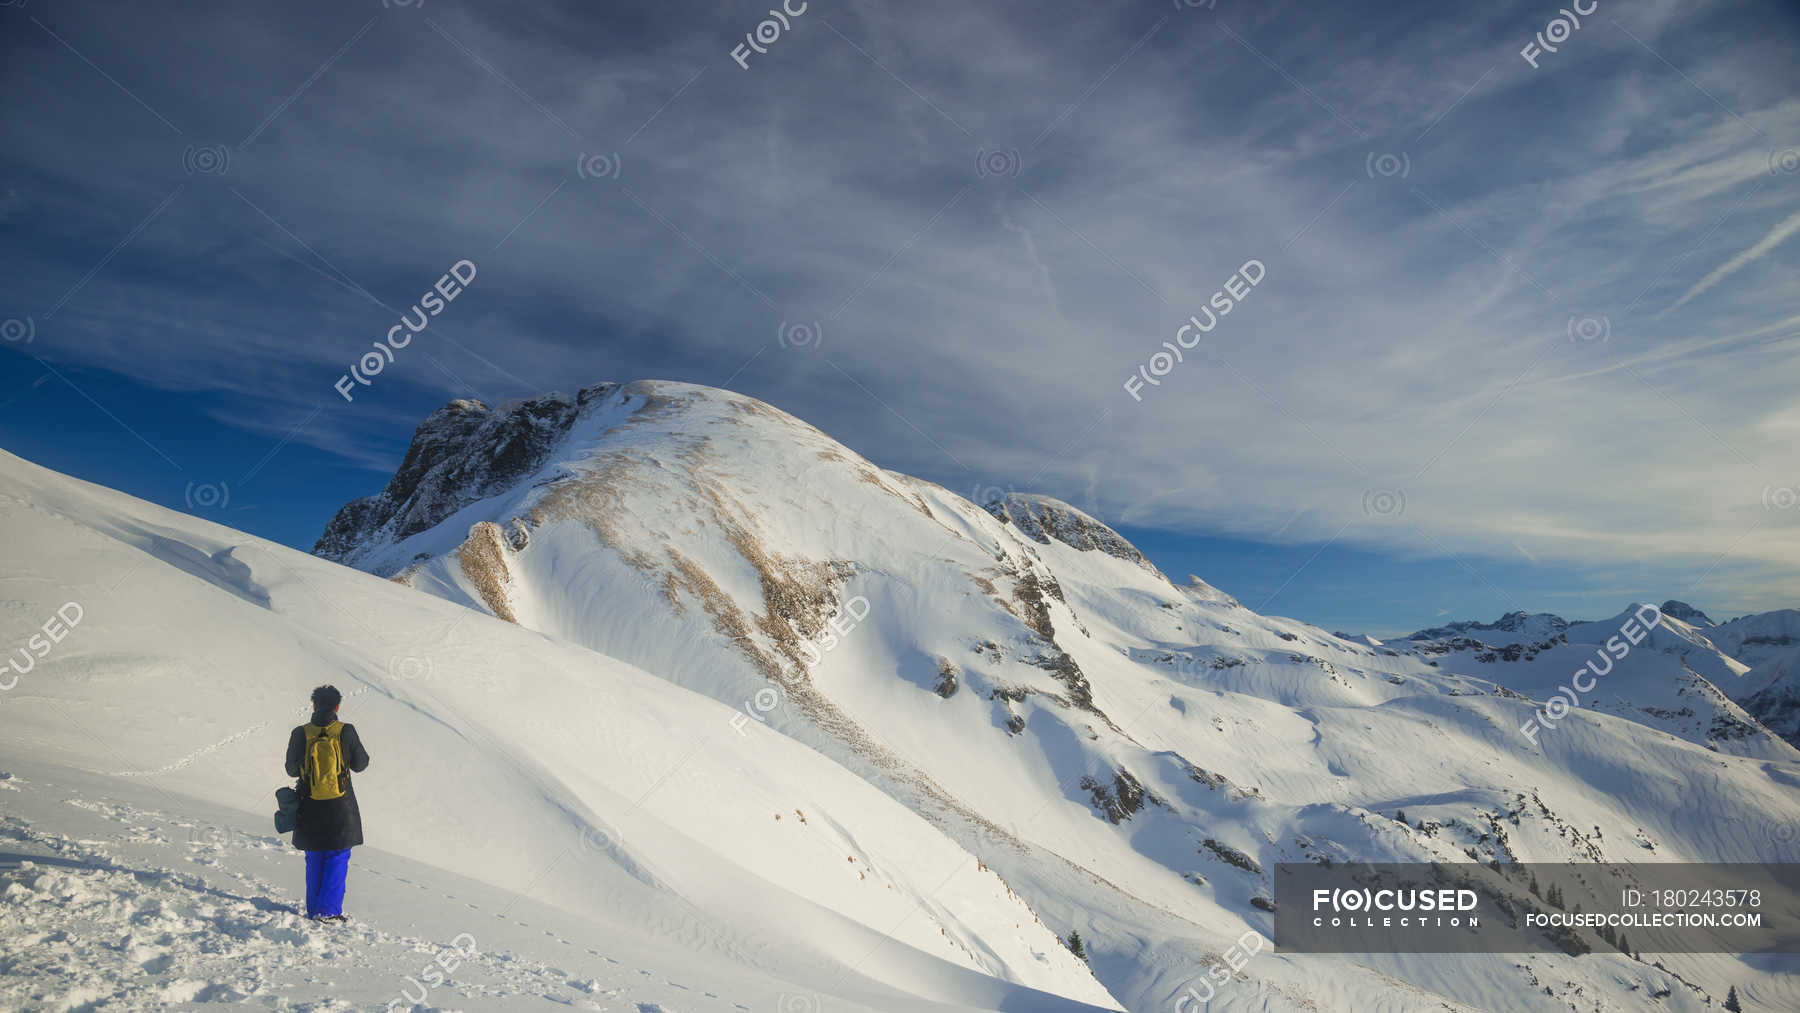 Germany, Allgaeu, Woman looking at mountain panorama with